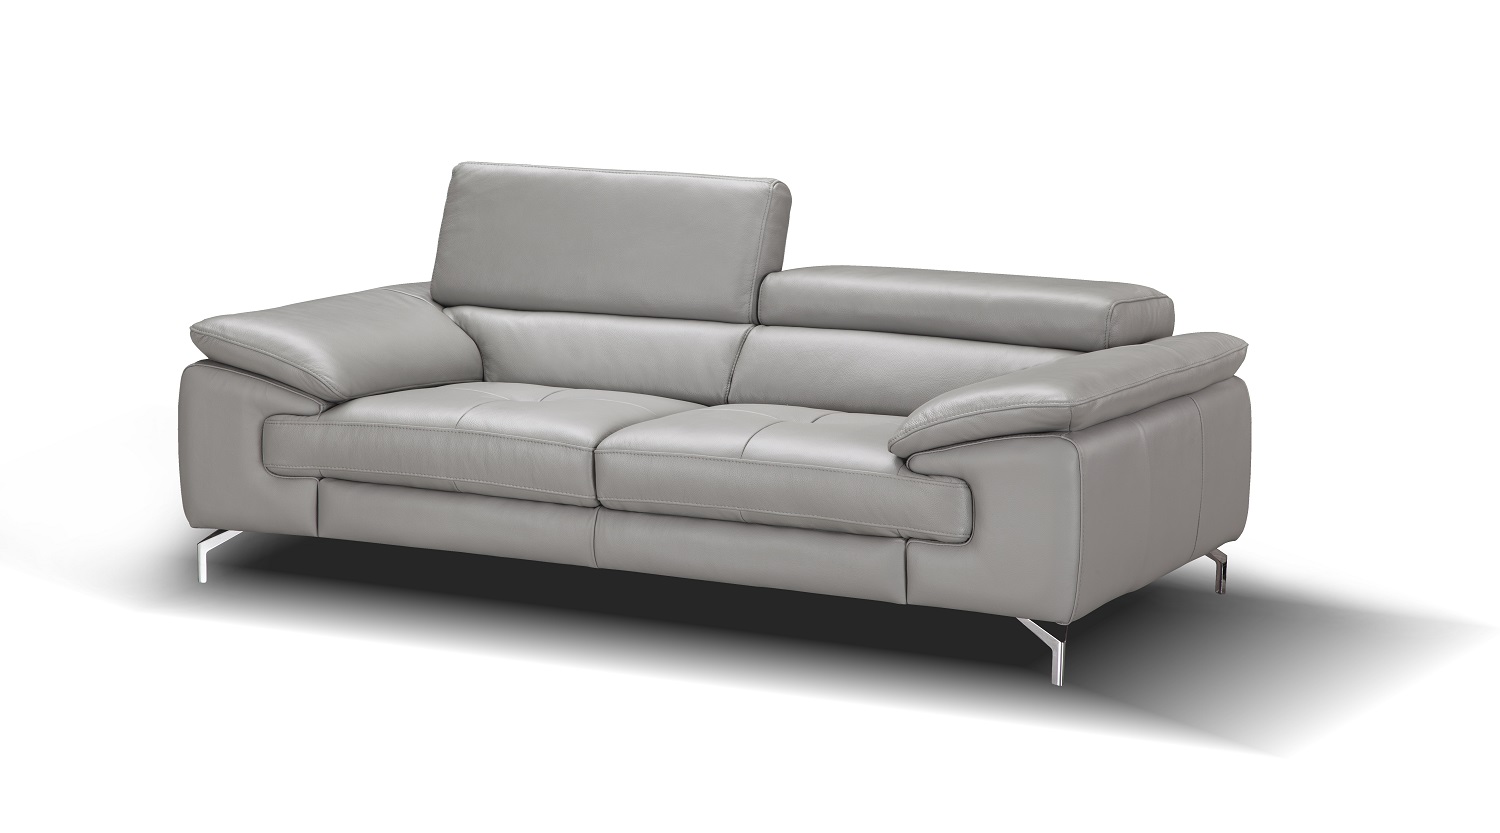 Trendy Sofa and Loveseat in Premium Leather